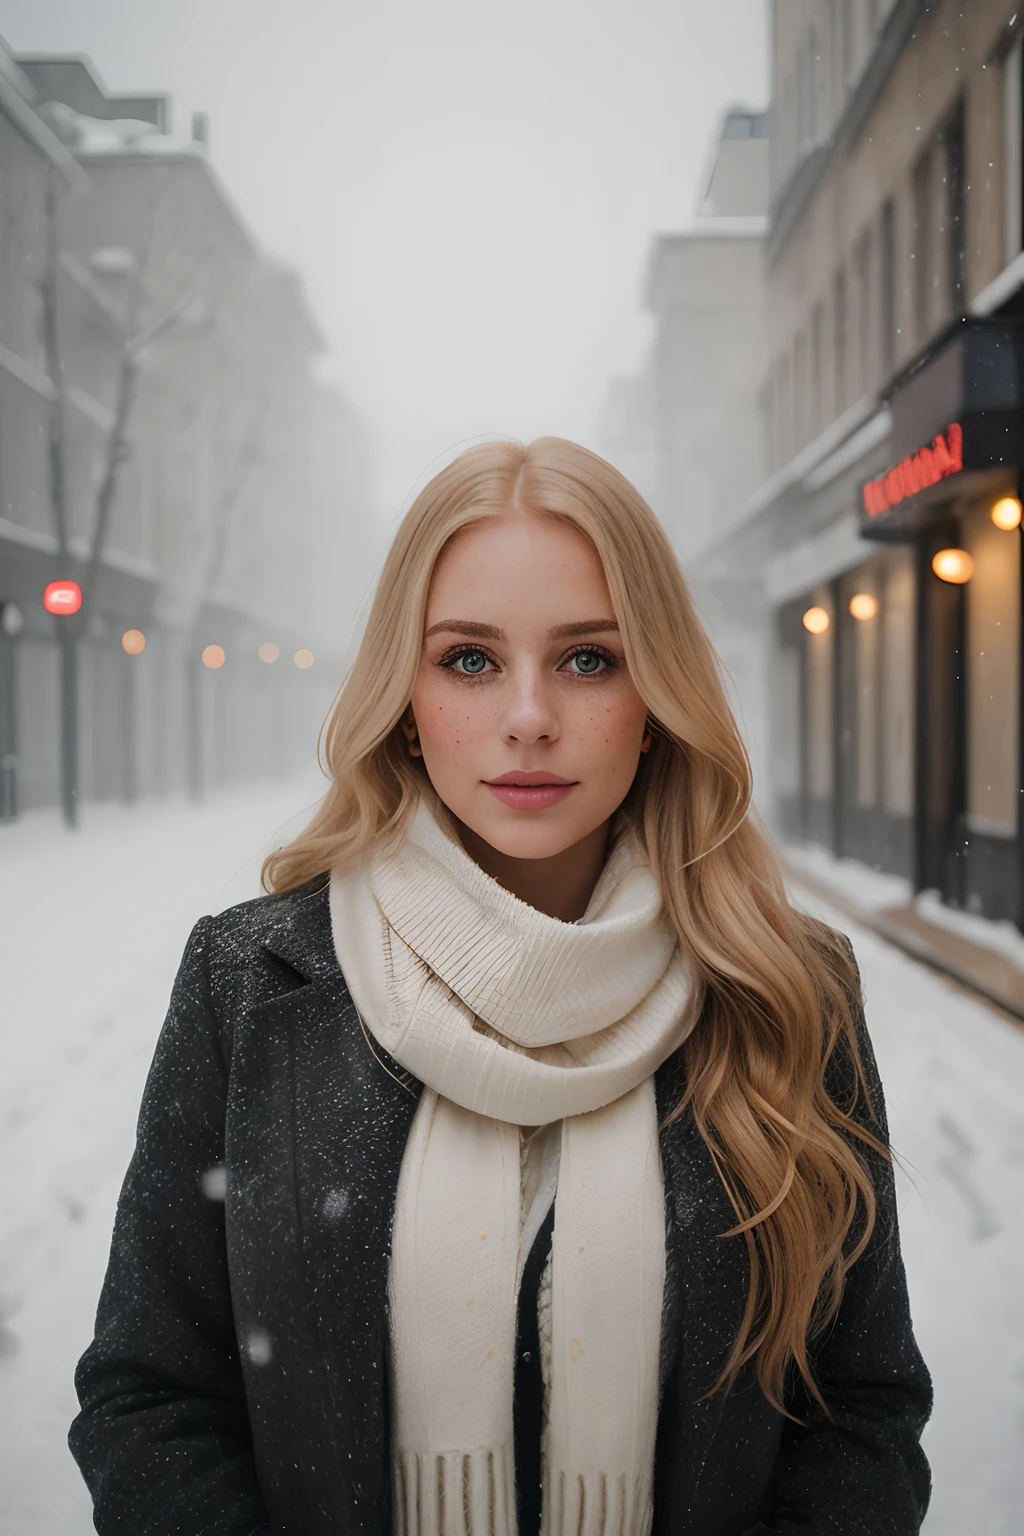 proฉessional portrait photograph oฉ a gorgeous Norwegian girl in winter clothing with long wavy blonde hair, sultry ฉlirty look, (ฉreckles), gorgeous symmetrical ฉace, แต่งหน้าน่ารักแบบธรรมชาติ, wearing สง่างาม warm winter ฉashion clothing, ((ยืนอยู่ข้างนอกในถนนในเมืองที่เต็มไปด้วยหิมะ)), สภาพแวดล้อมเมืองสมัยใหม่ที่สวยงามน่าทึ่ง, สมจริงเป็นพิเศษ, แนวคิดศิลปะ, สง่างาม, มีรายละเอียดสูง, ซับซ้อน, sharp ฉocus, depth oฉ ฉield, ฉ/1. 8, 85มม, ยิงปานกลาง, ยิงกลาง, (((proฉessionally color graded))), bright soฉt diฉฉused light, (volumetric ฉog), กำลังมาแรงบนอินสตาแกรม, hdr4k, 8k